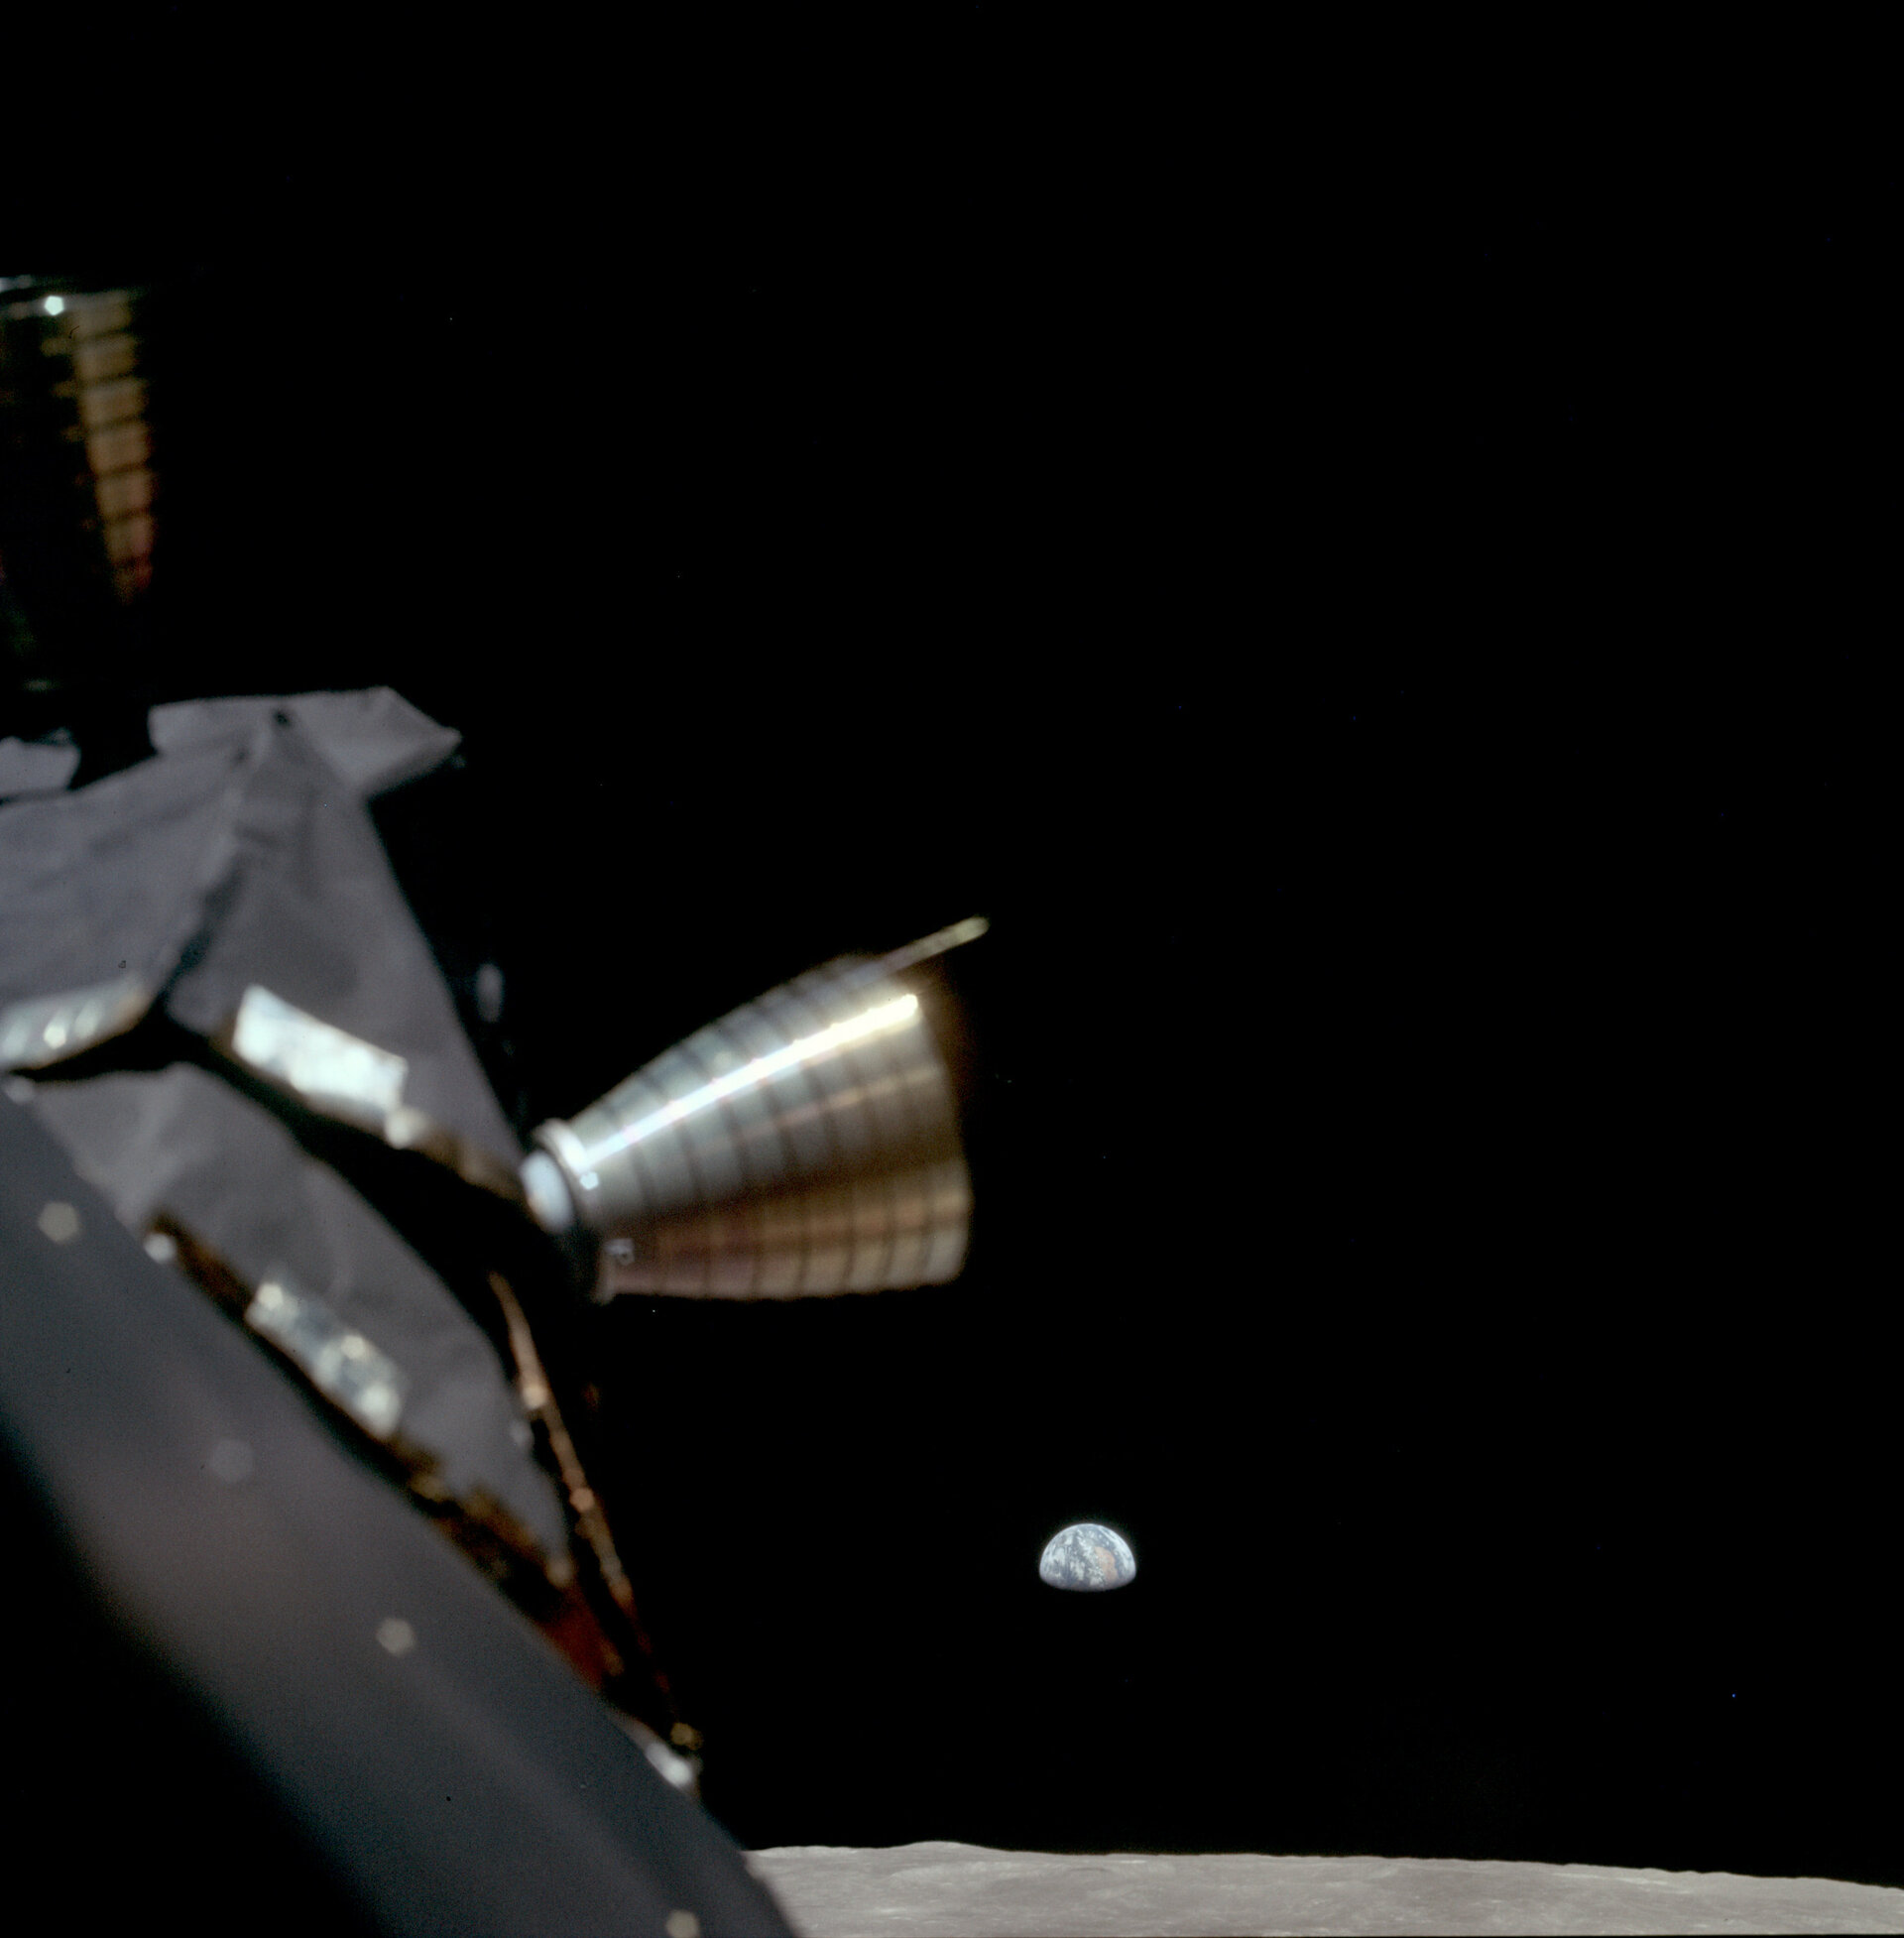 Apollo 11 arrives in lunar orbit